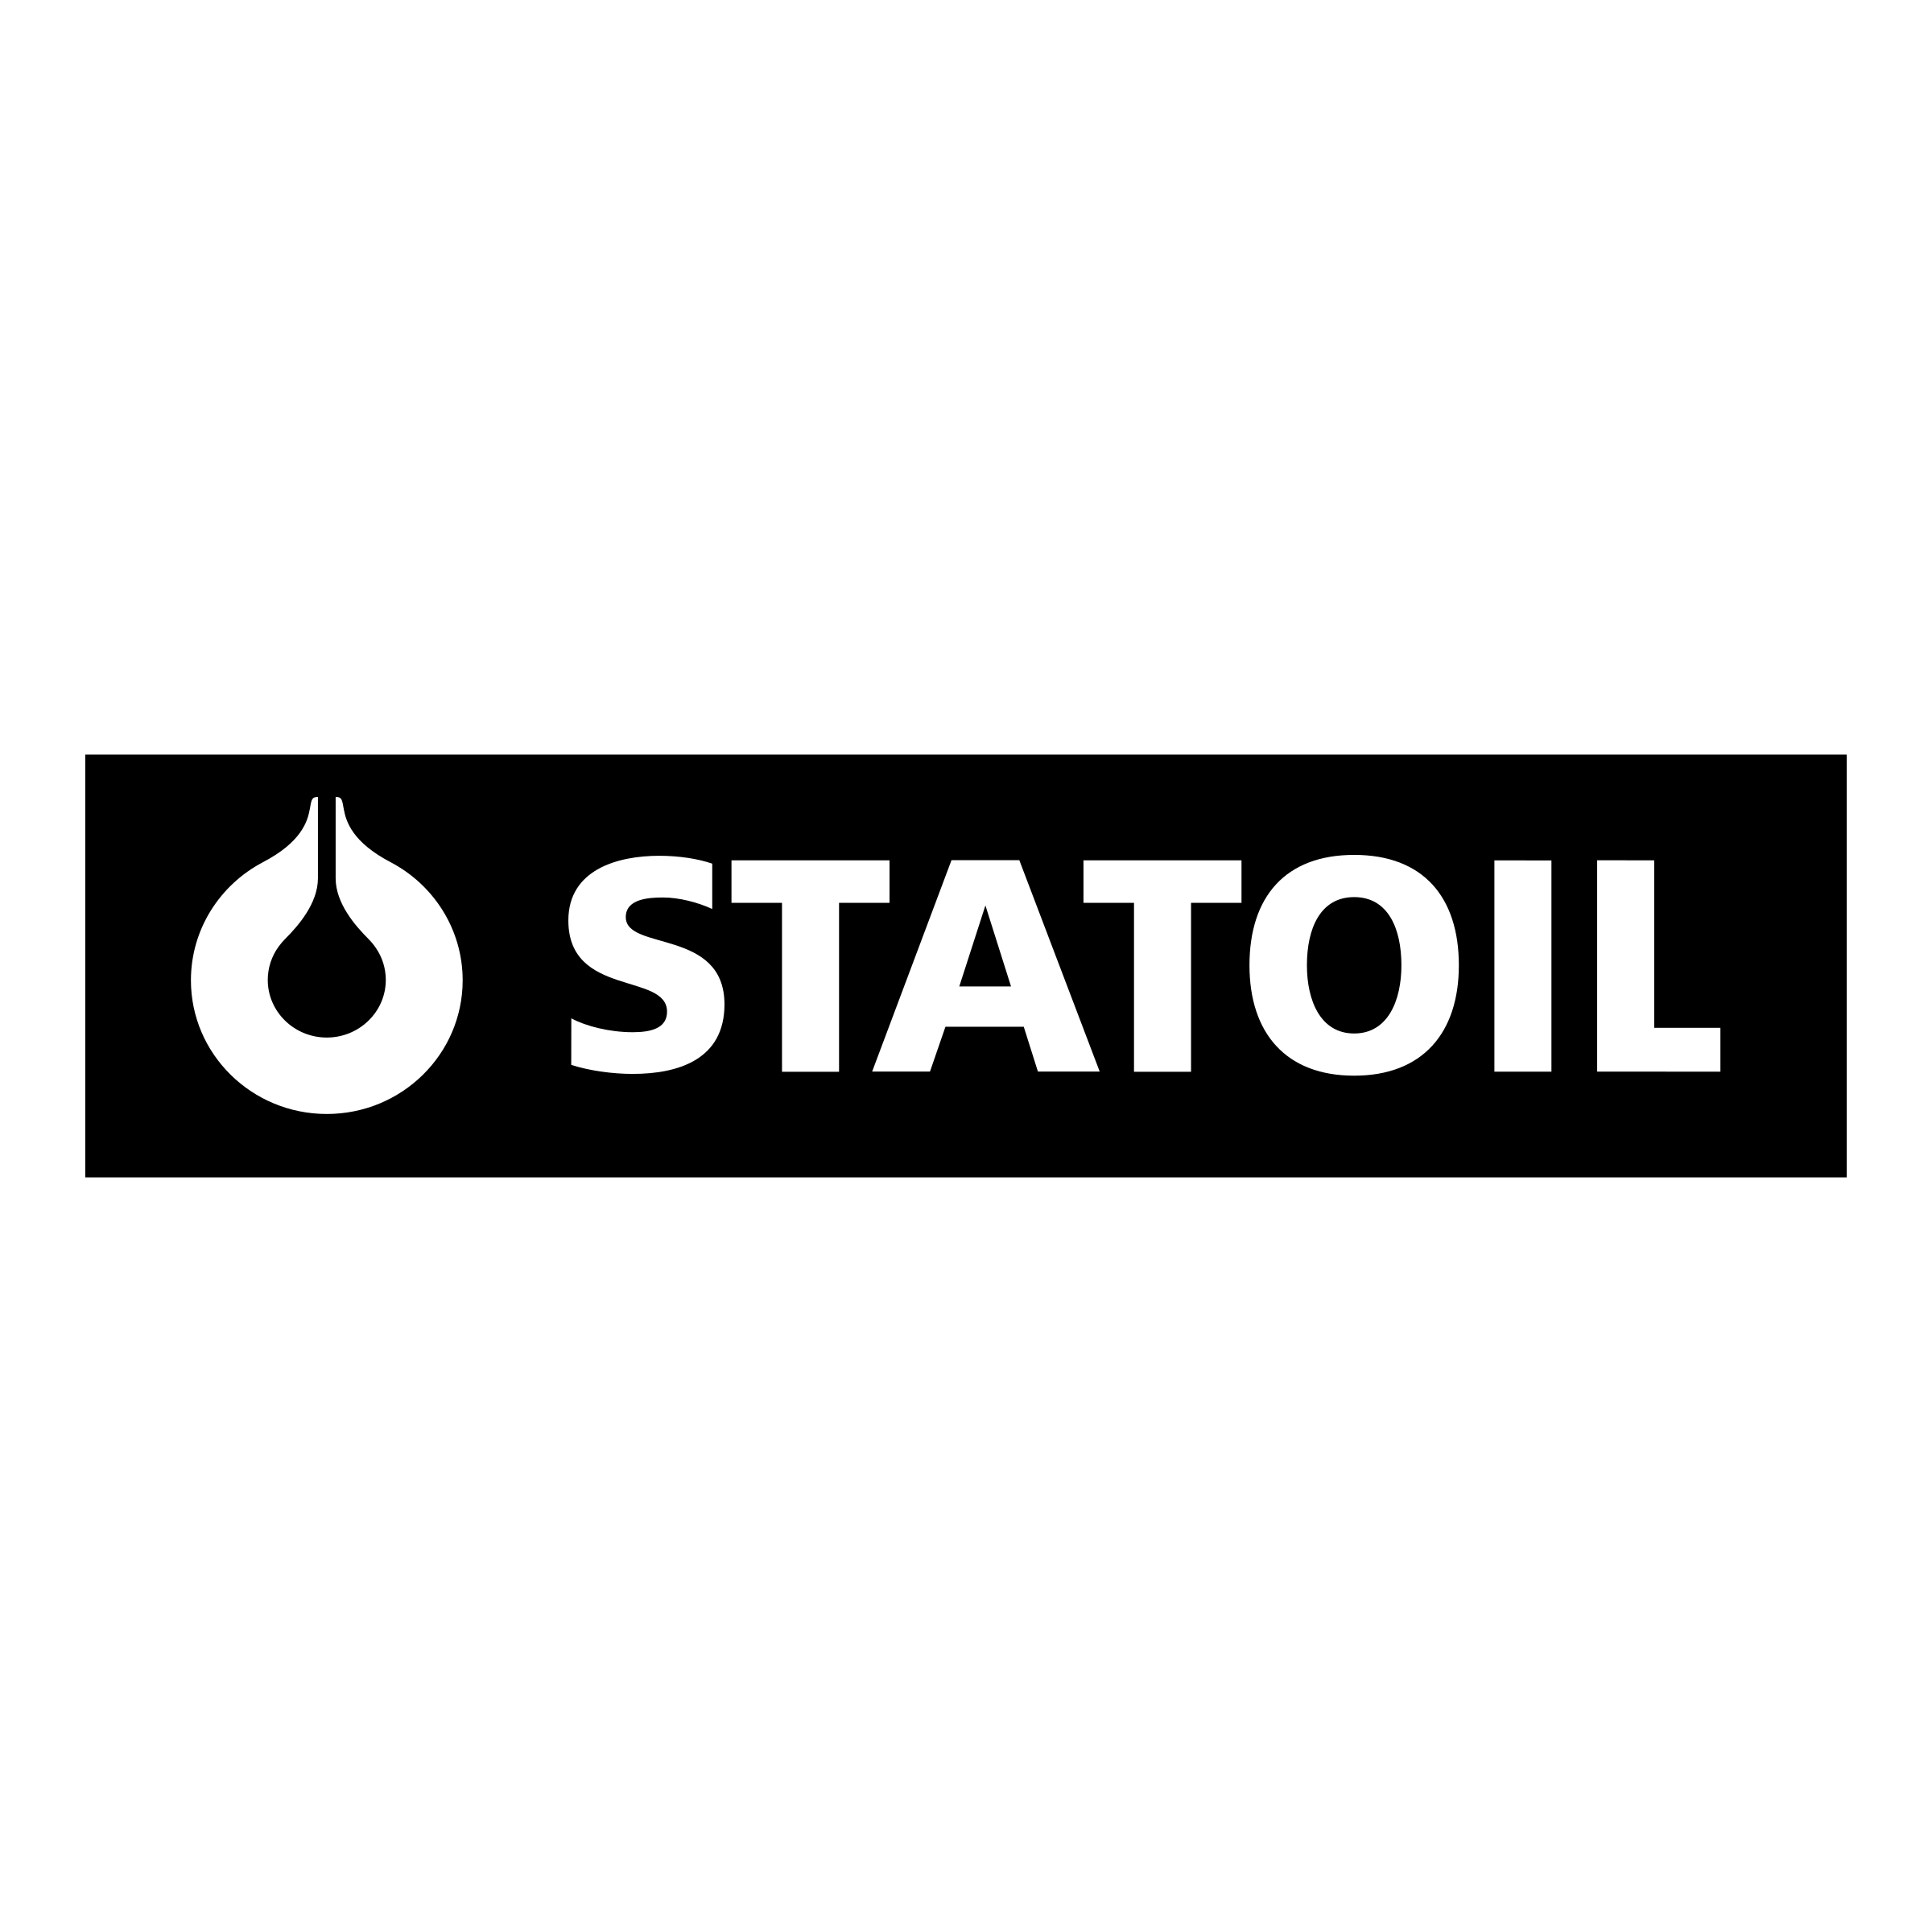 Statoil Logo - Statoil Logo PNG Transparent & SVG Vector - Freebie Supply